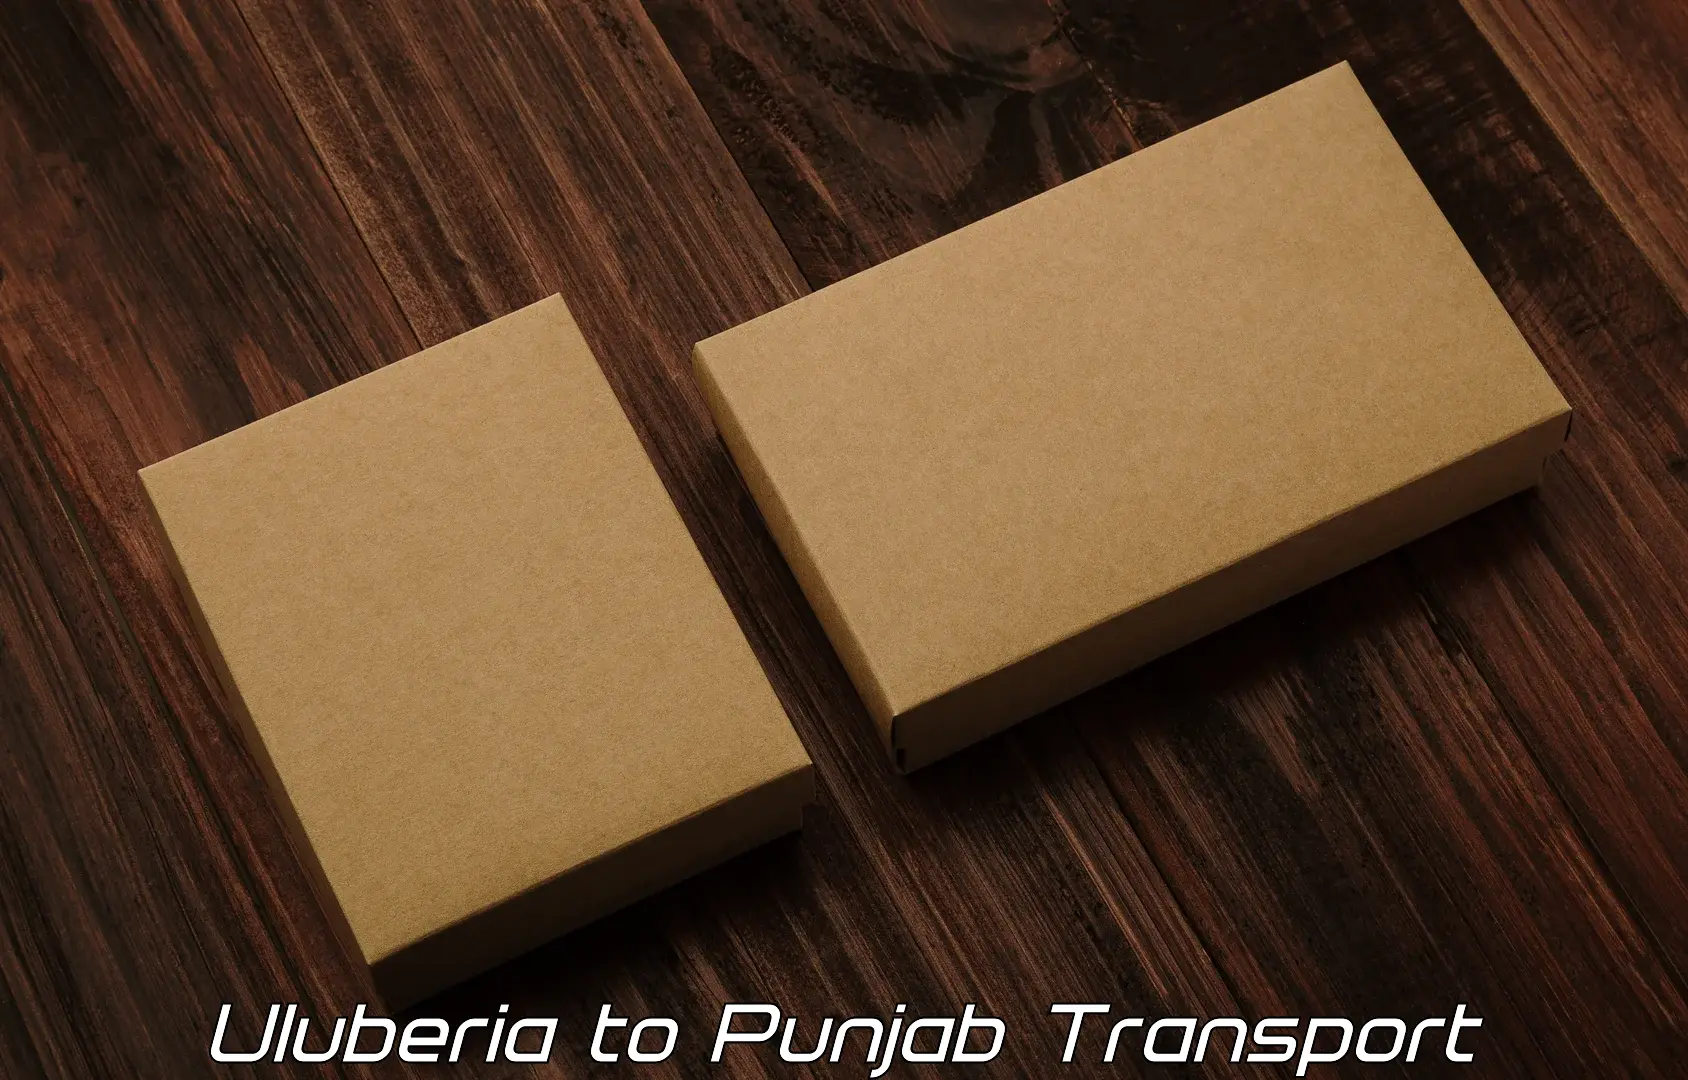 Sending bike to another city Uluberia to Punjab